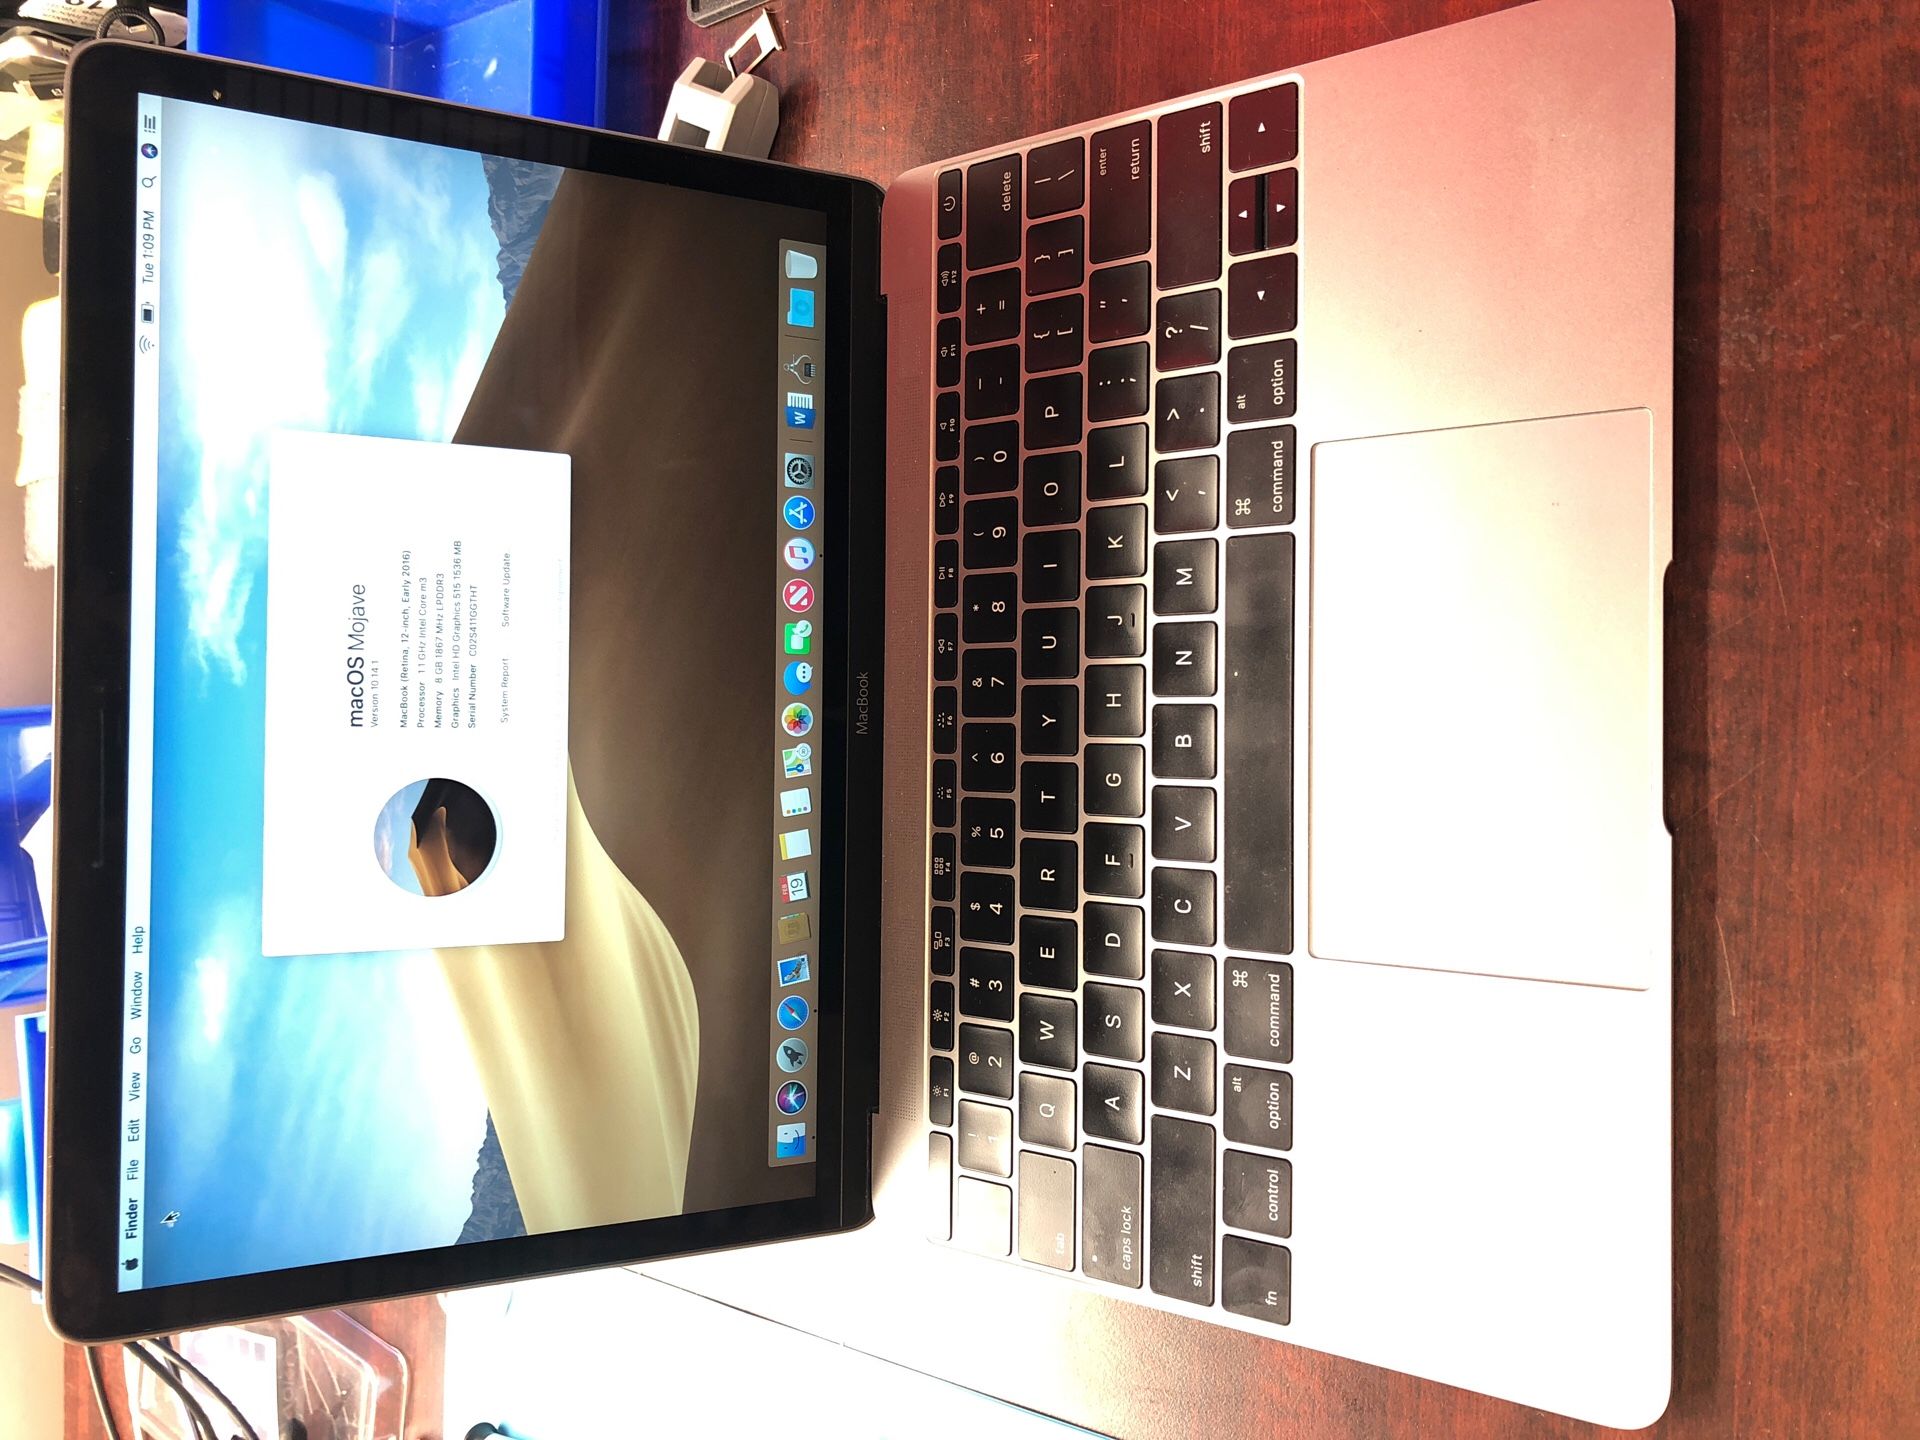 MacBook 13 inch Retina Display $1,100$